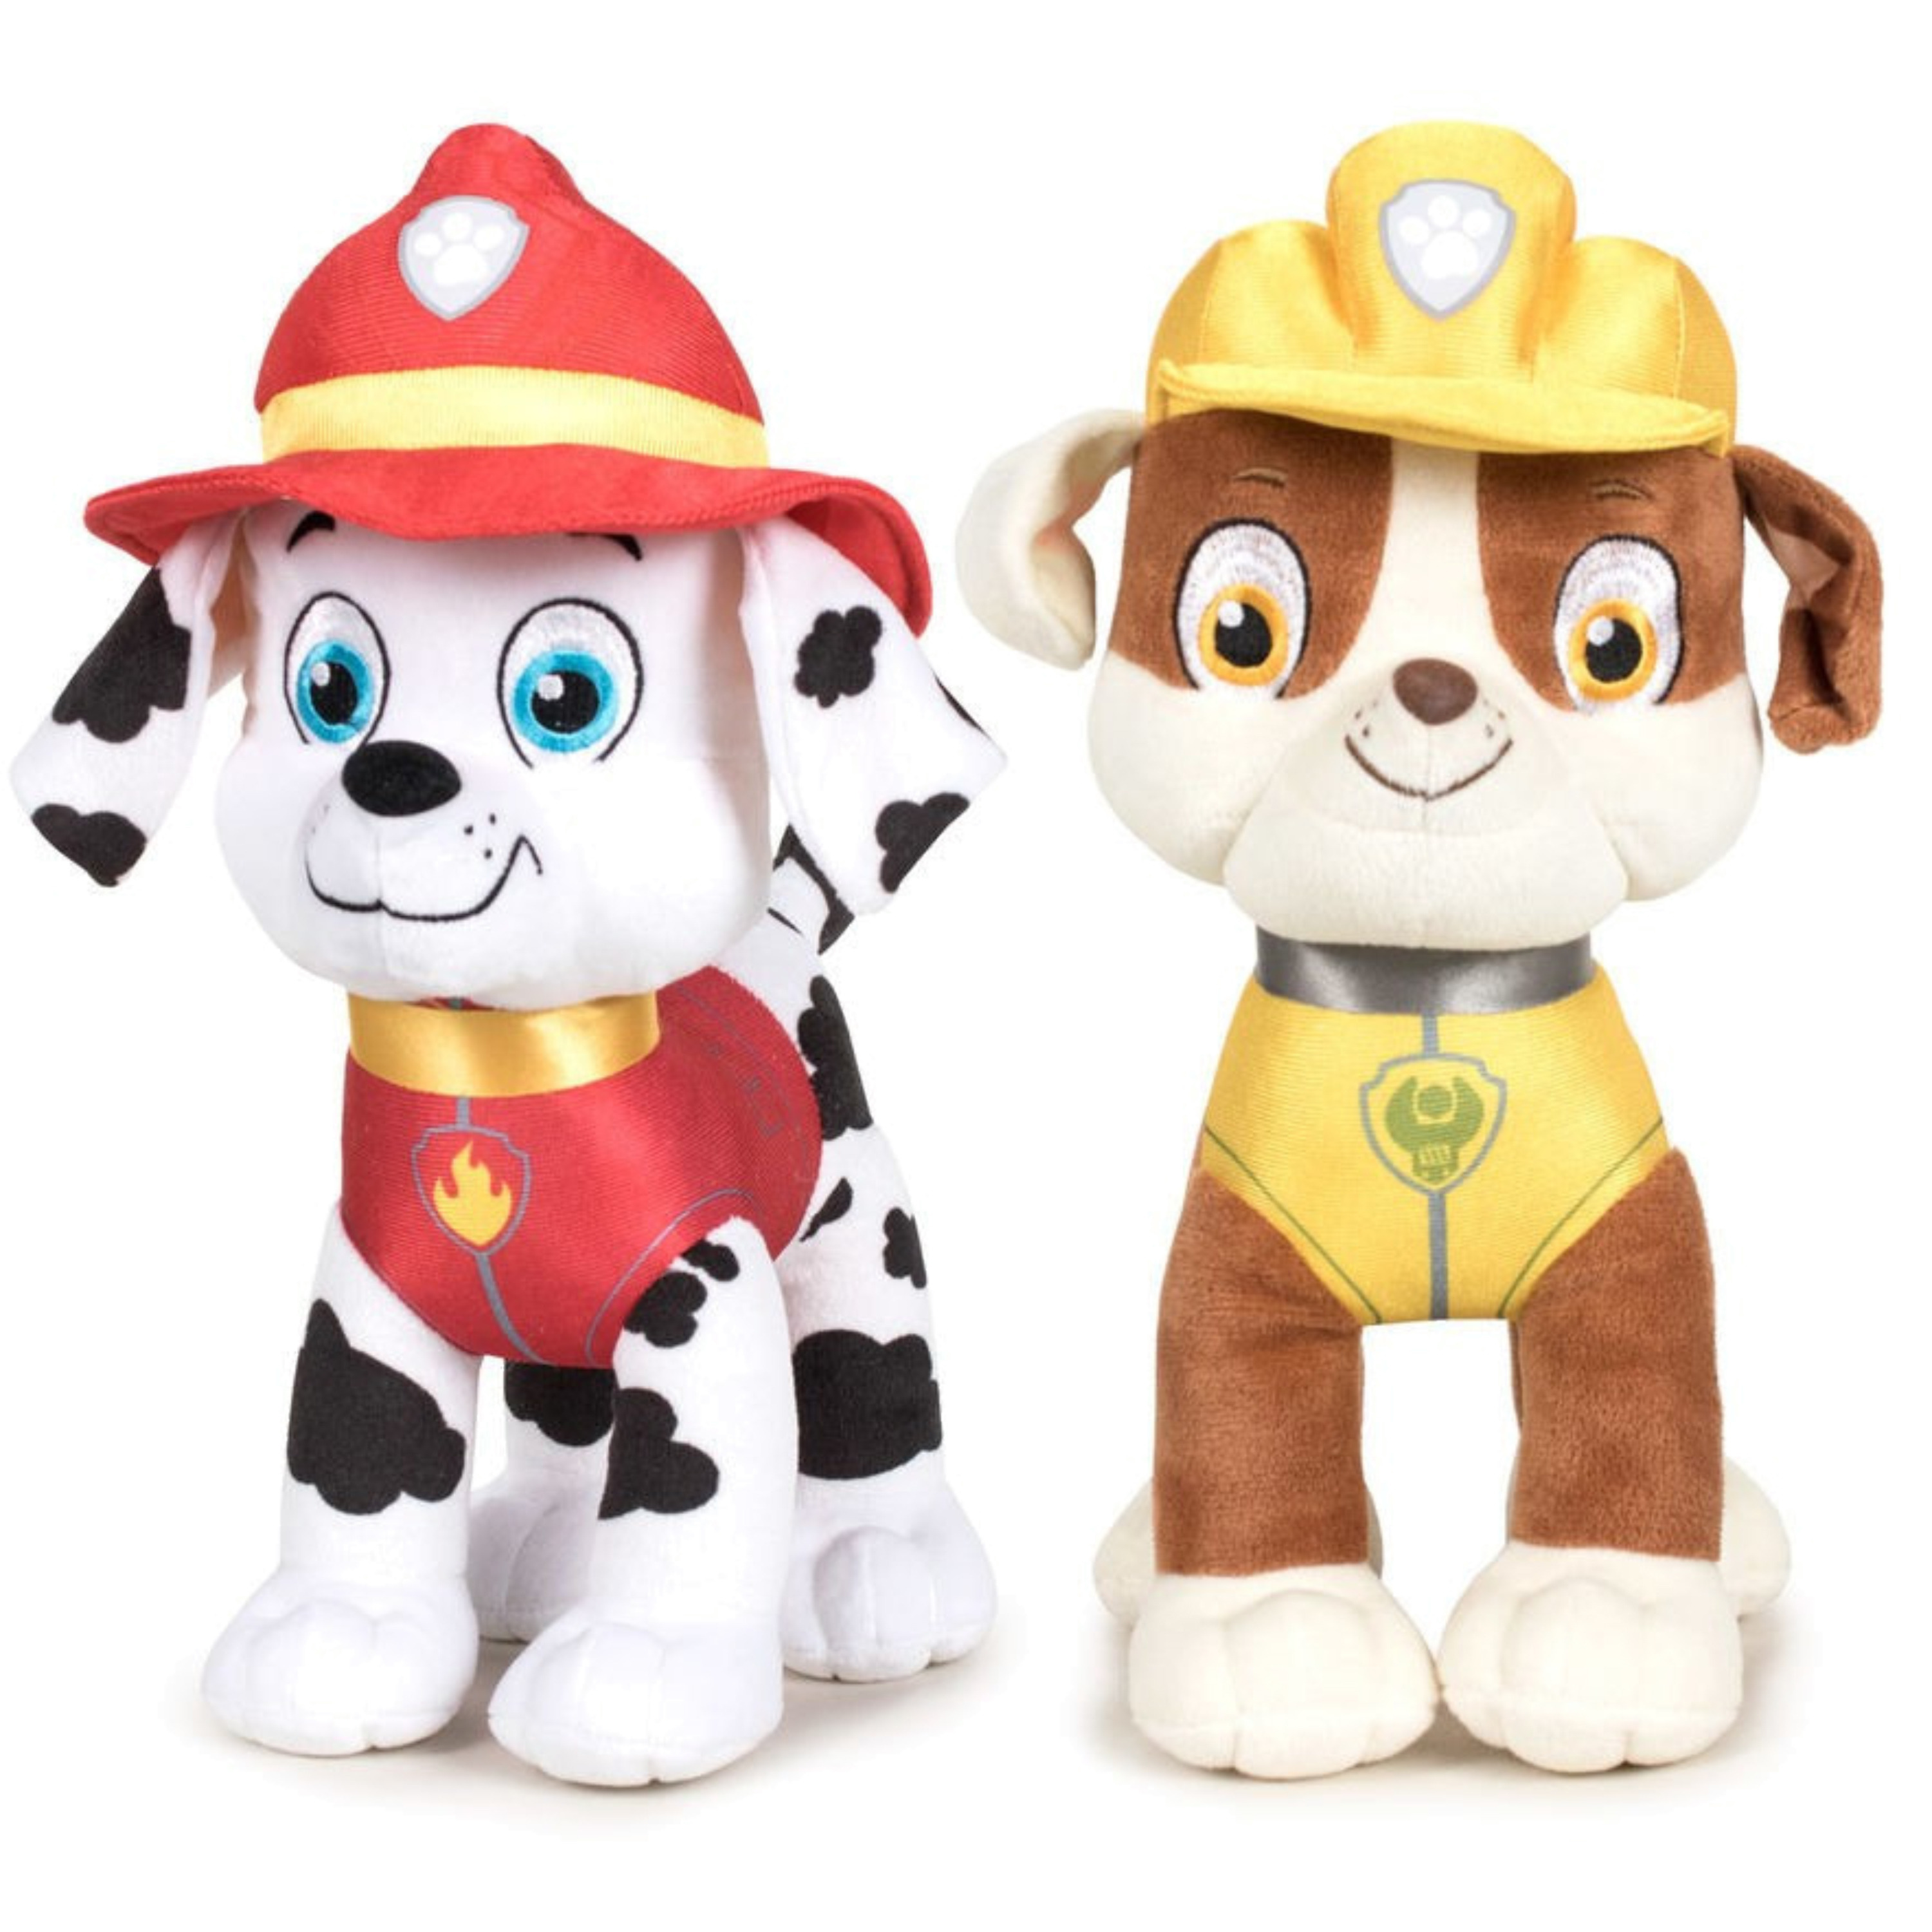 Paw Patrol figuren speelgoed knuffels set van 2x karakters Marshall en Rubble 19 cm